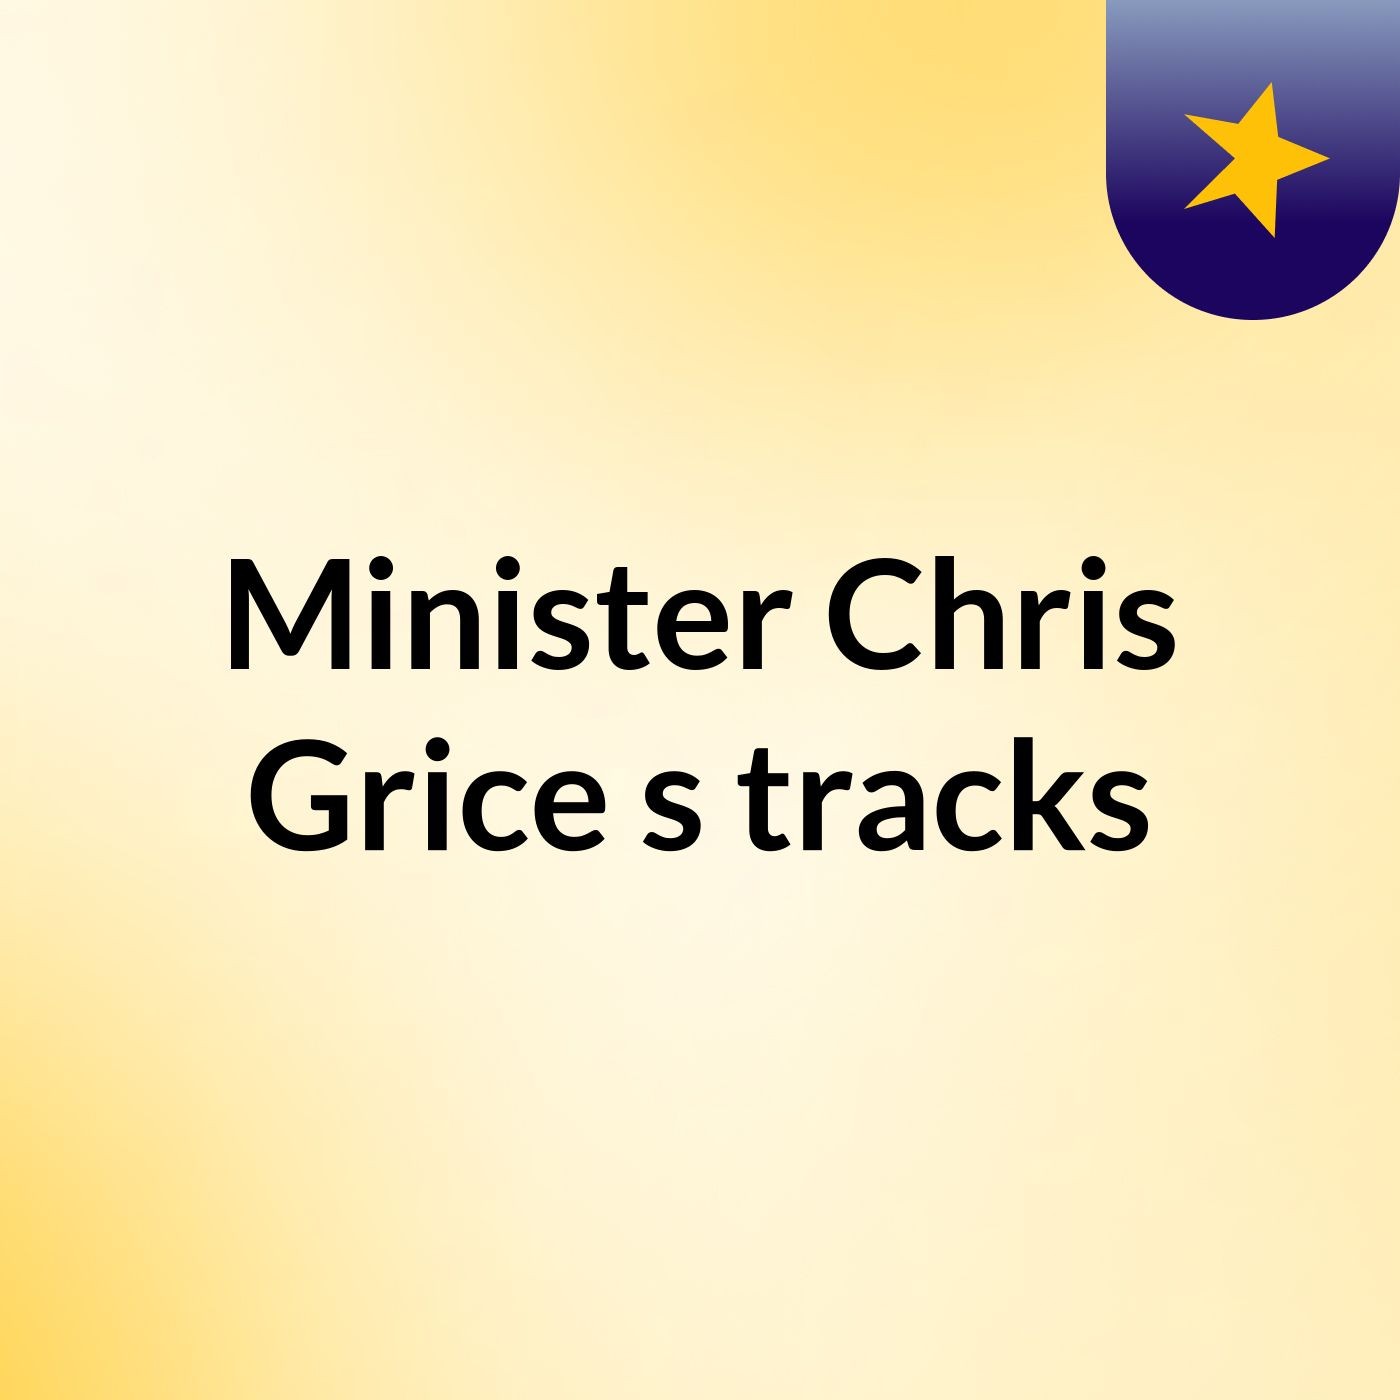 Minister Chris Grice's tracks